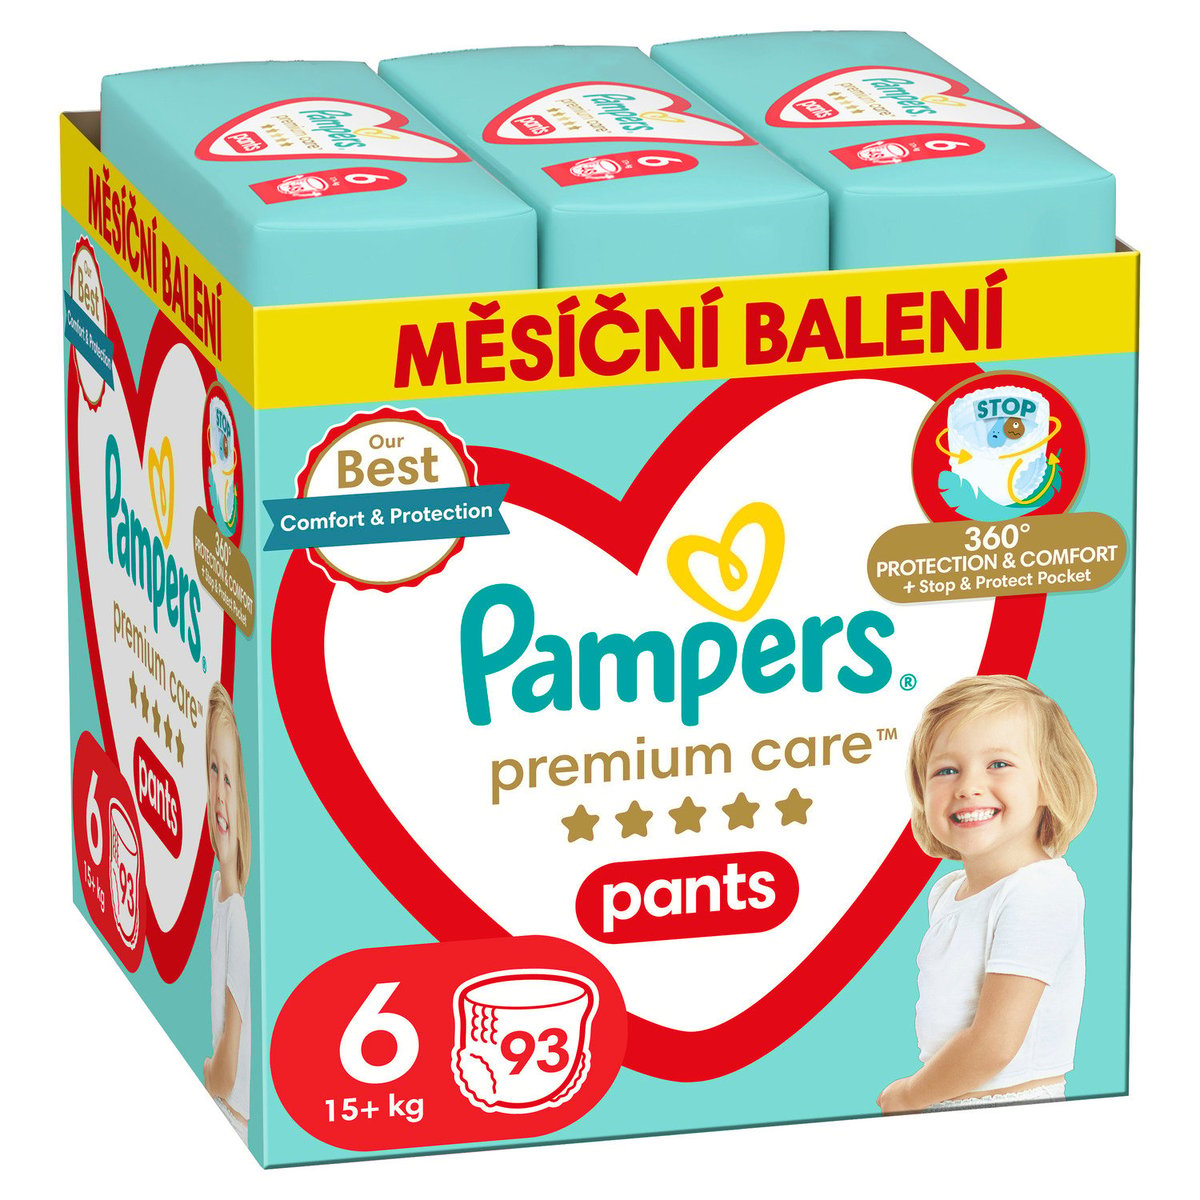 Pampers Pants Premium care plenkové kalhotky 6 (15+ kg)